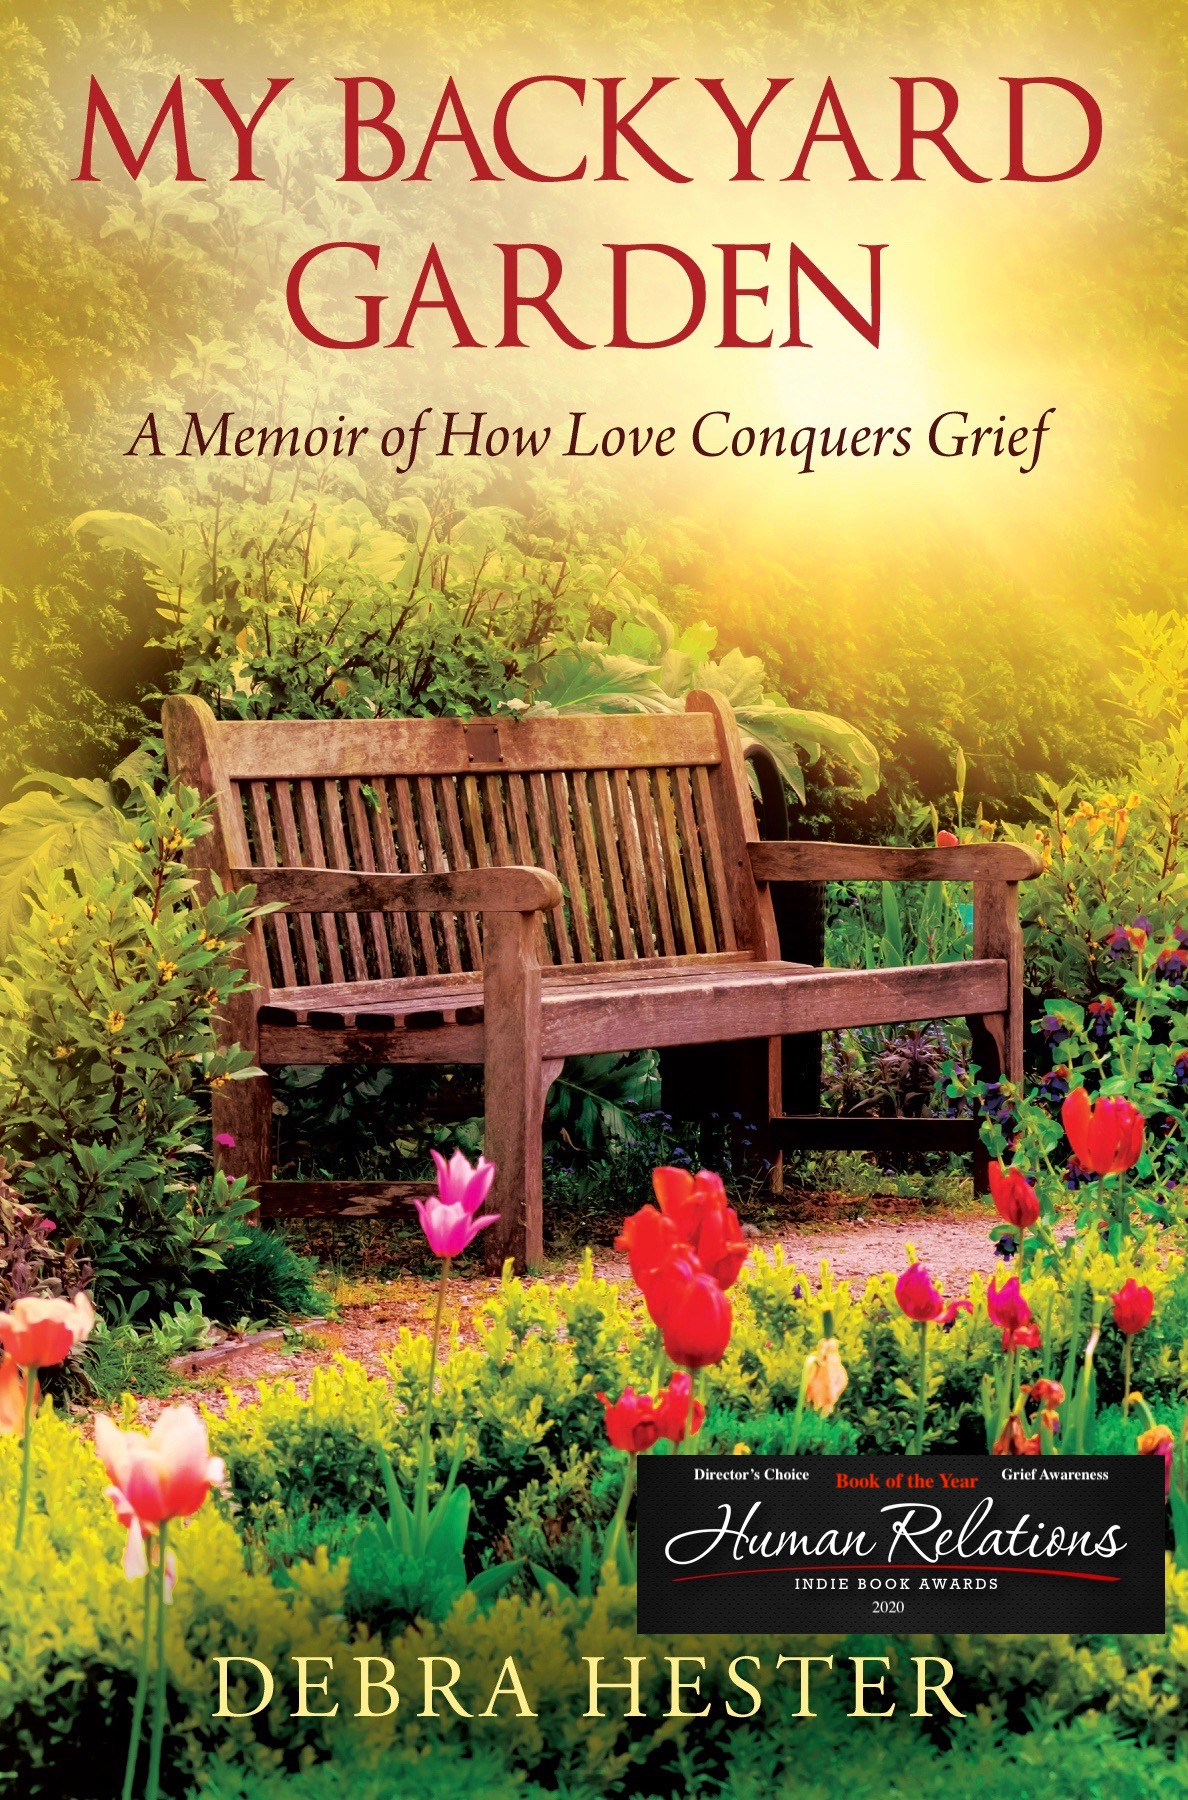 My Backyard Garden, A Memoir - 2020 Book of the Year Award